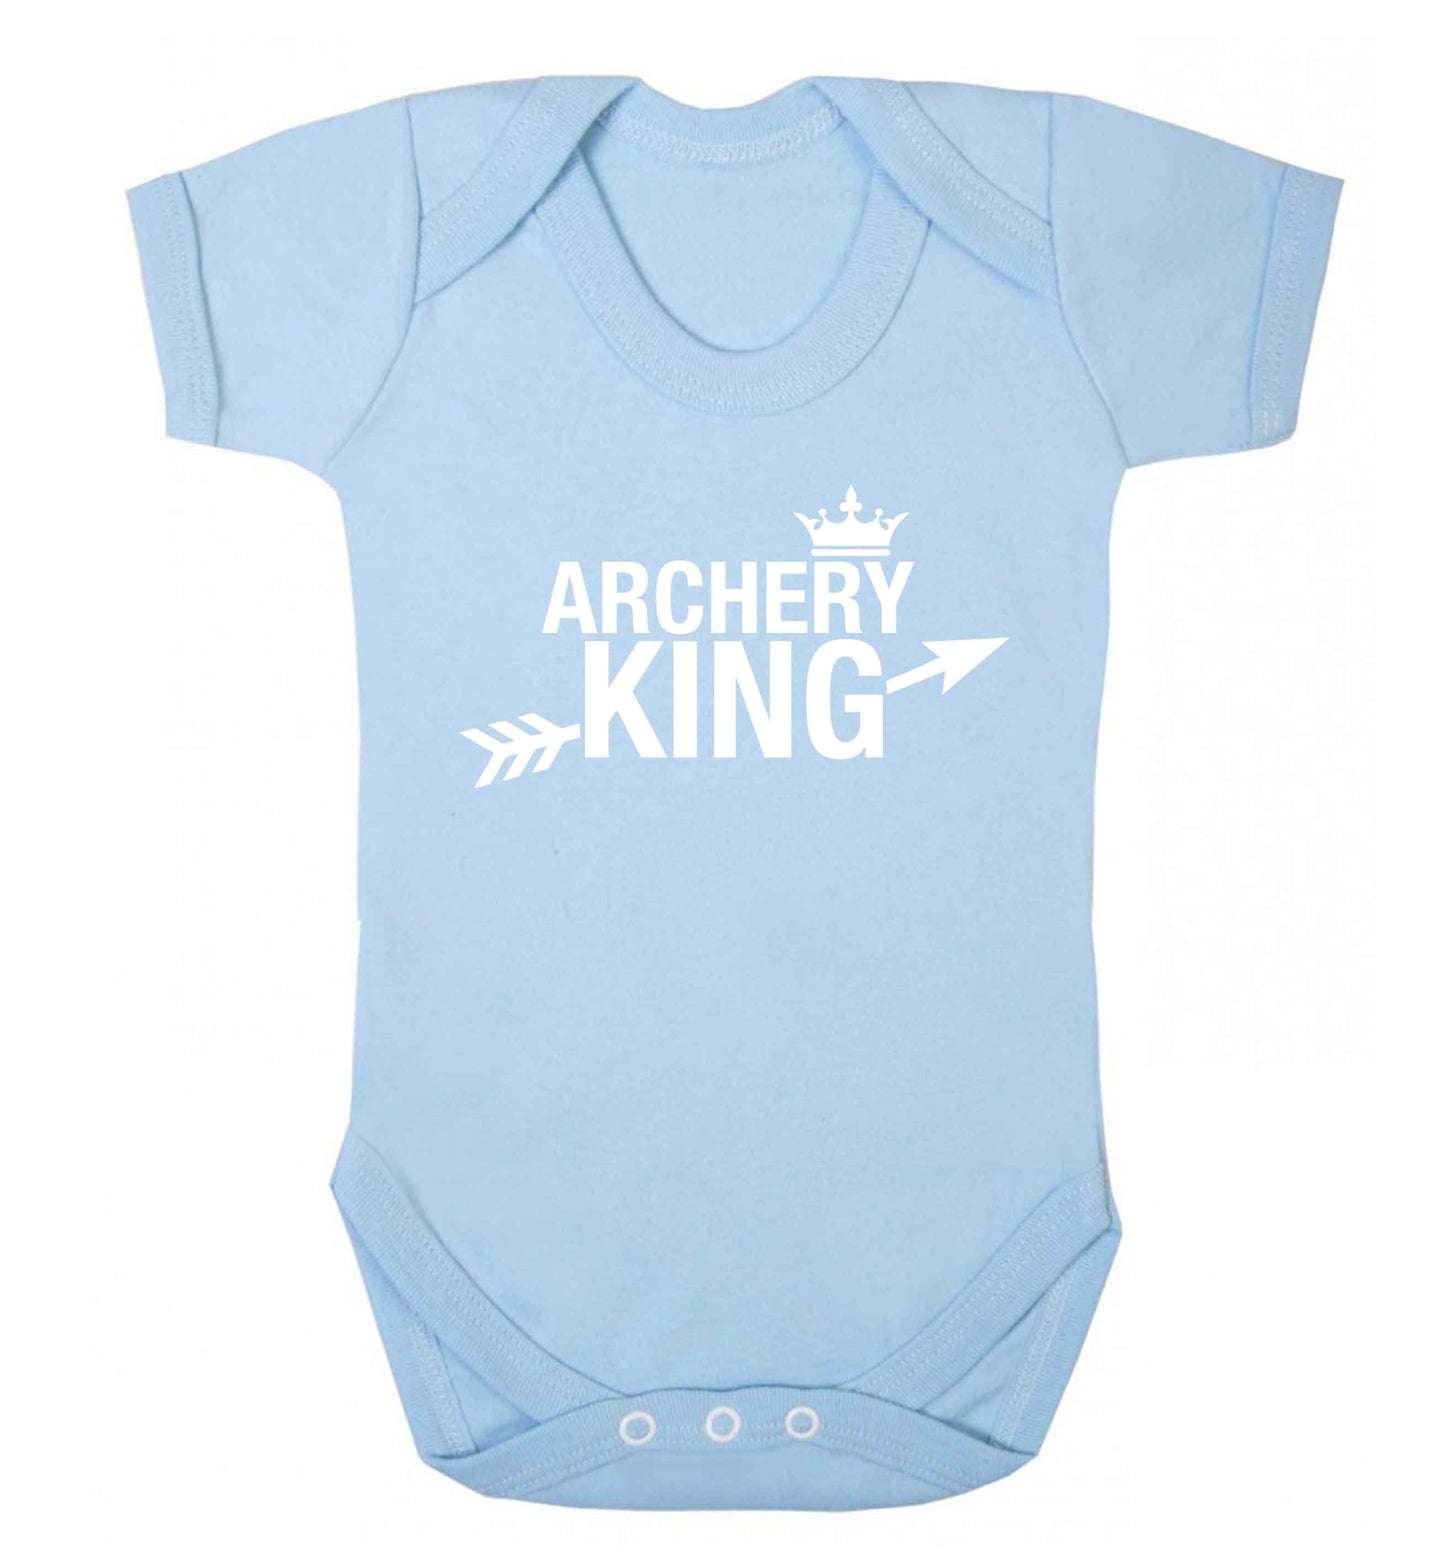 Archery king Baby Vest pale blue 18-24 months